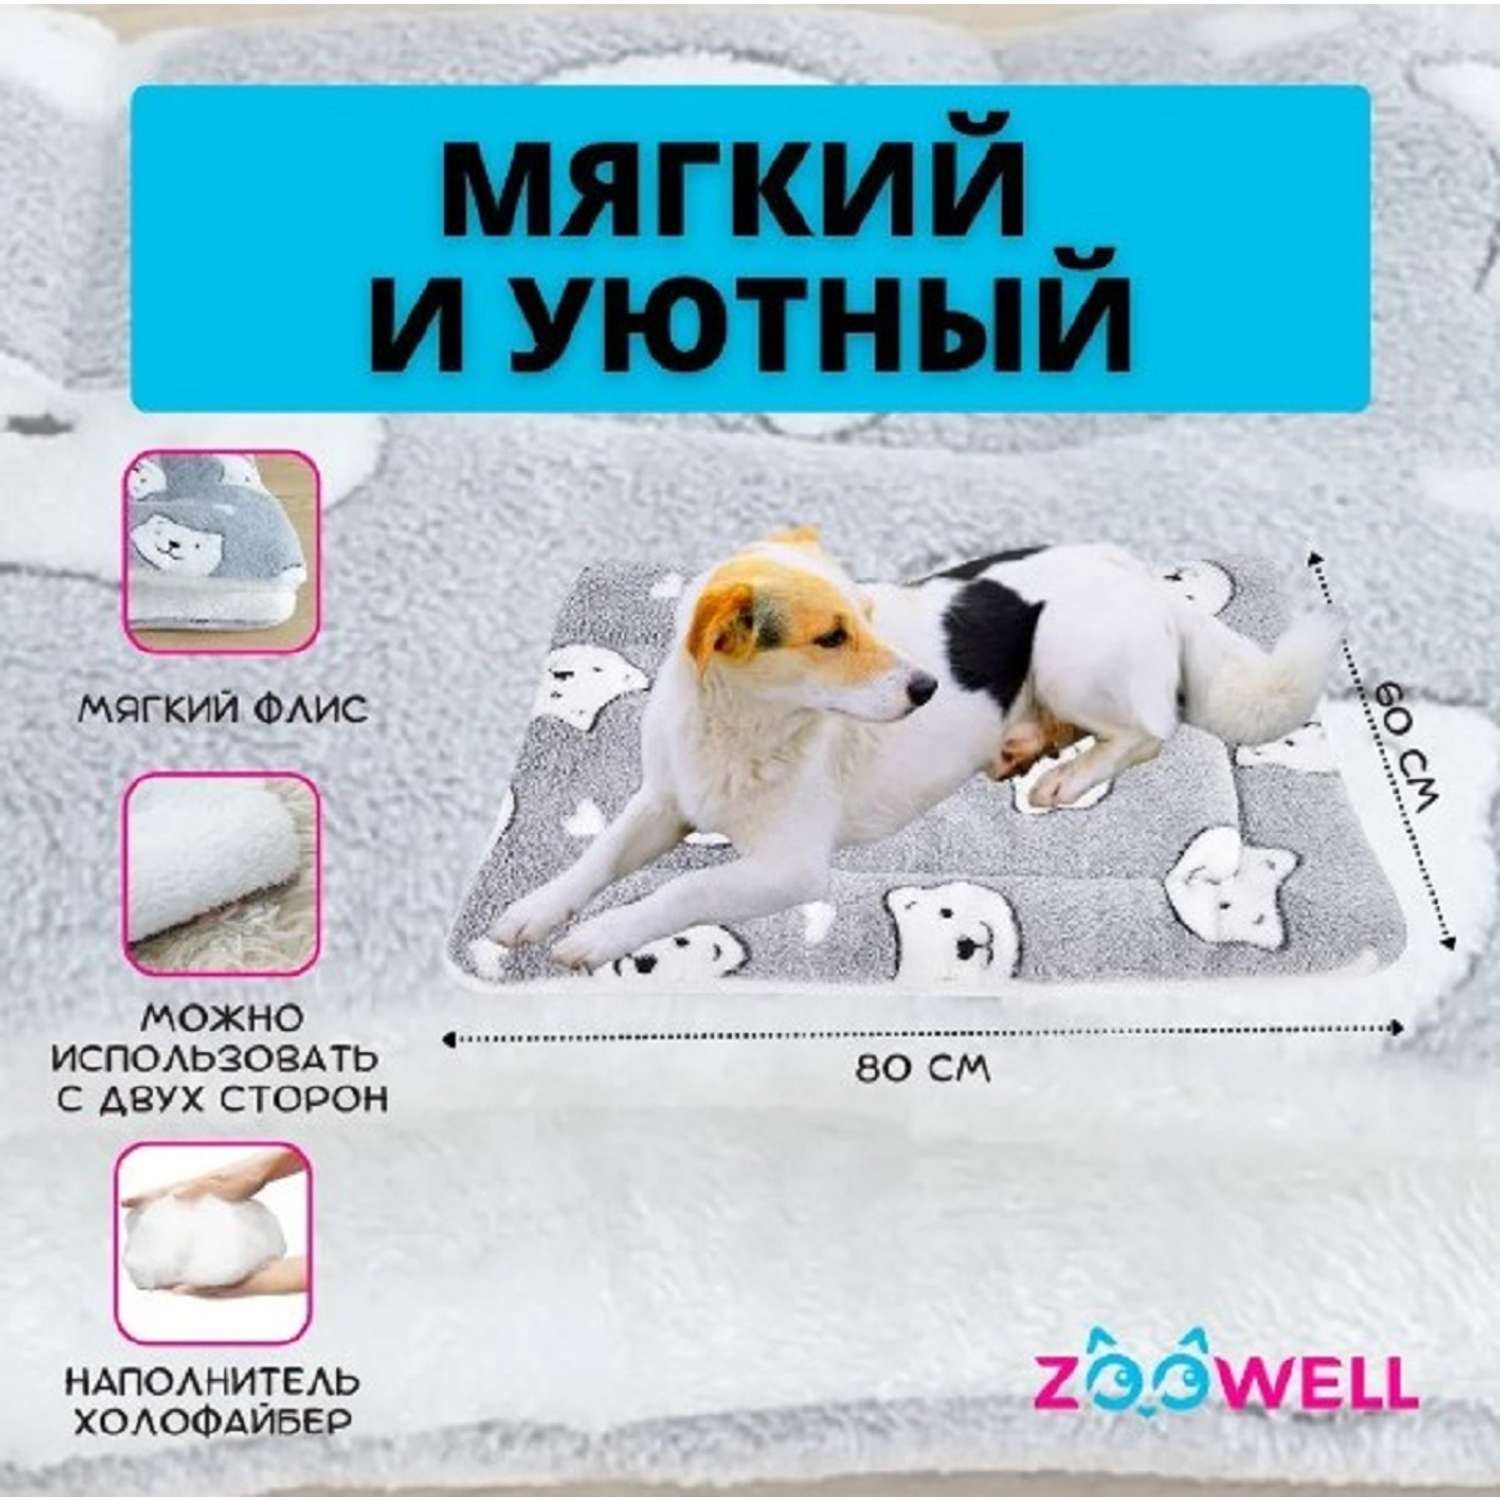 Лежанка для животных ZDK ZooWell Мишки 80*60 см - фото 2